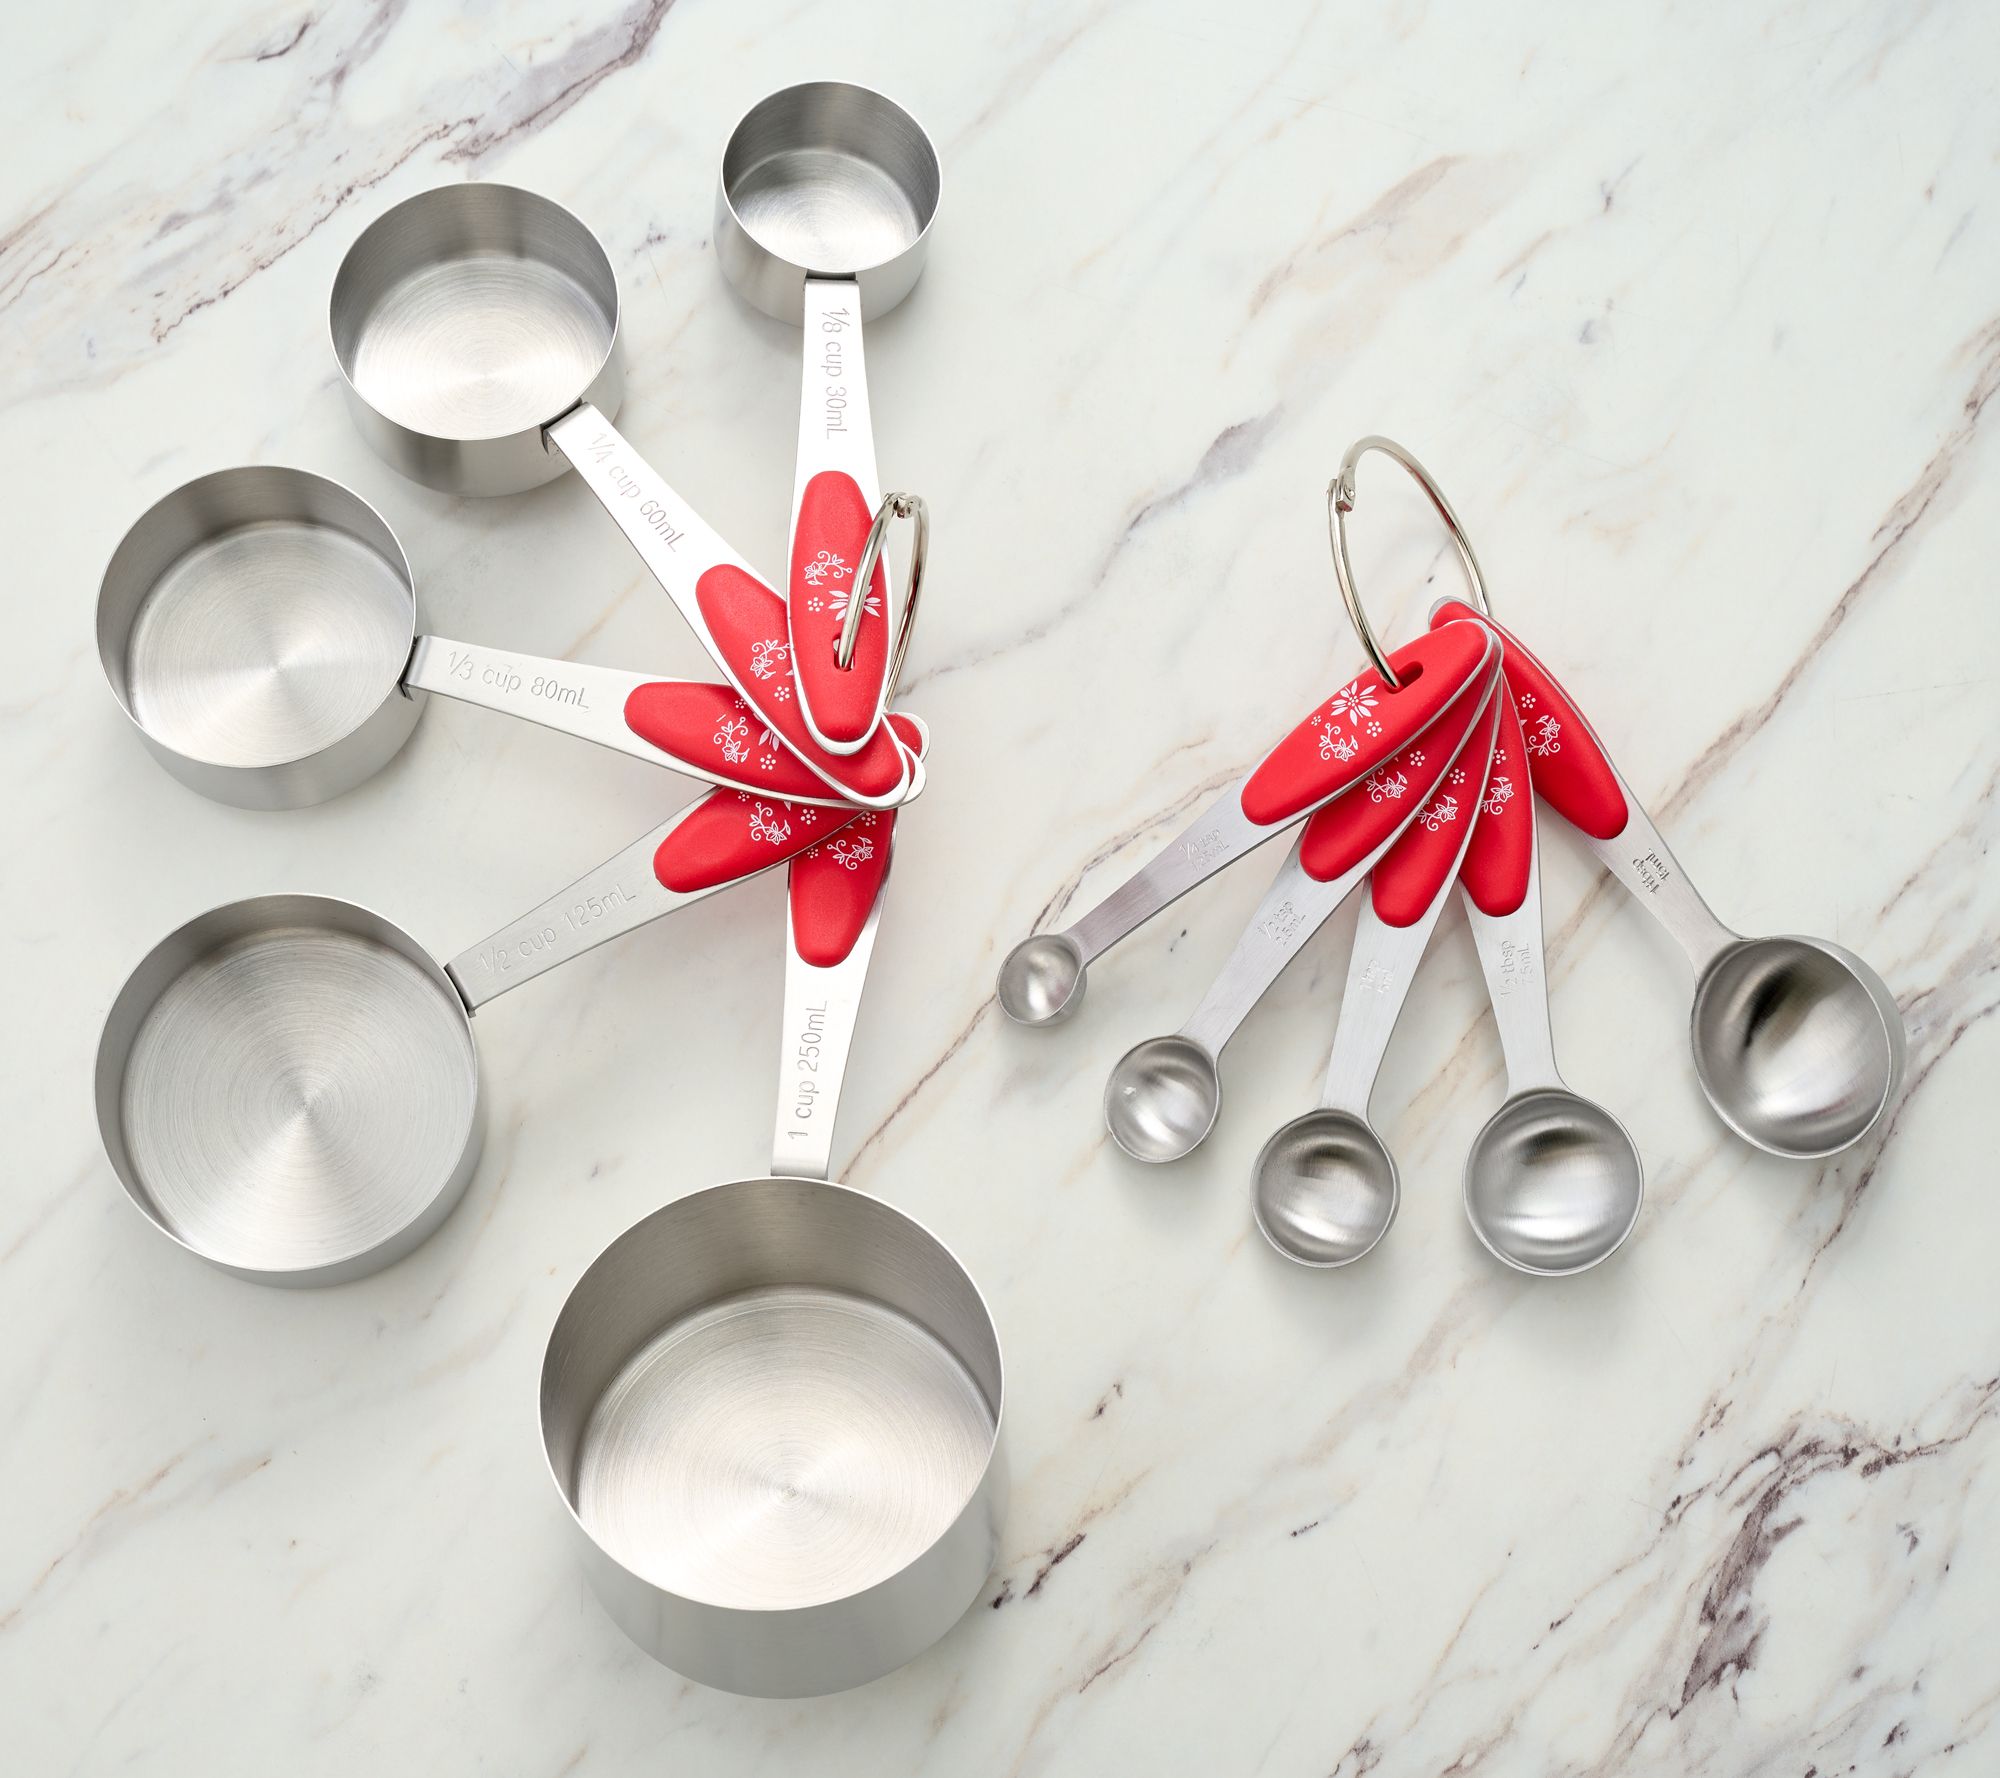 KitchenAid Universal Measuring Spoon Set - Red - 5 Pieces